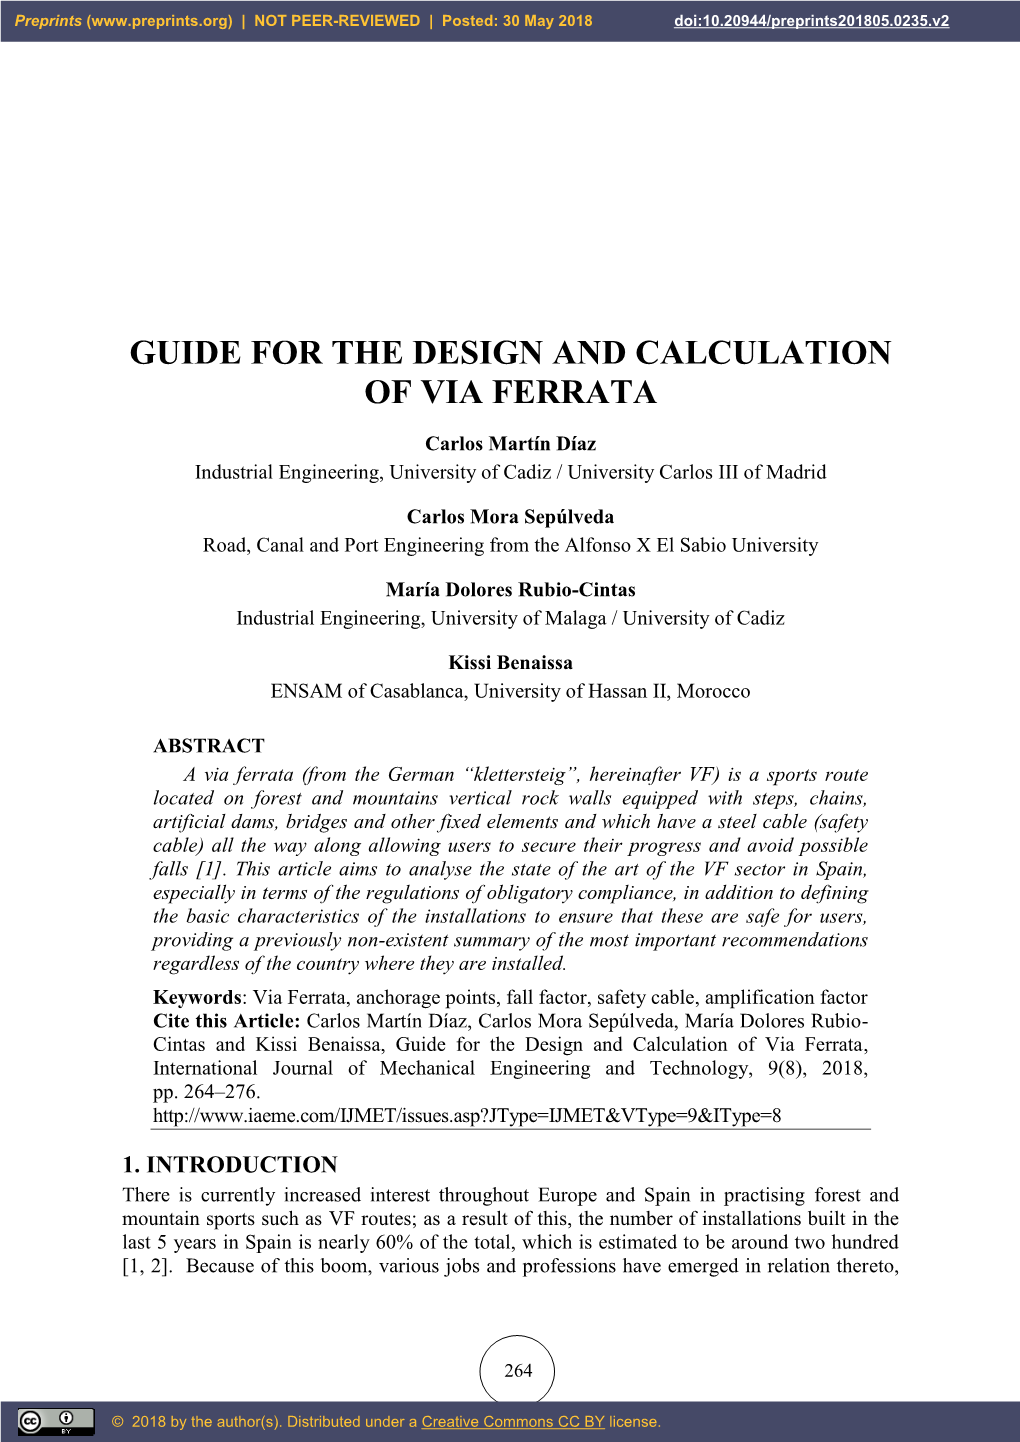 Guide for the Design and Calculation of Via Ferrata